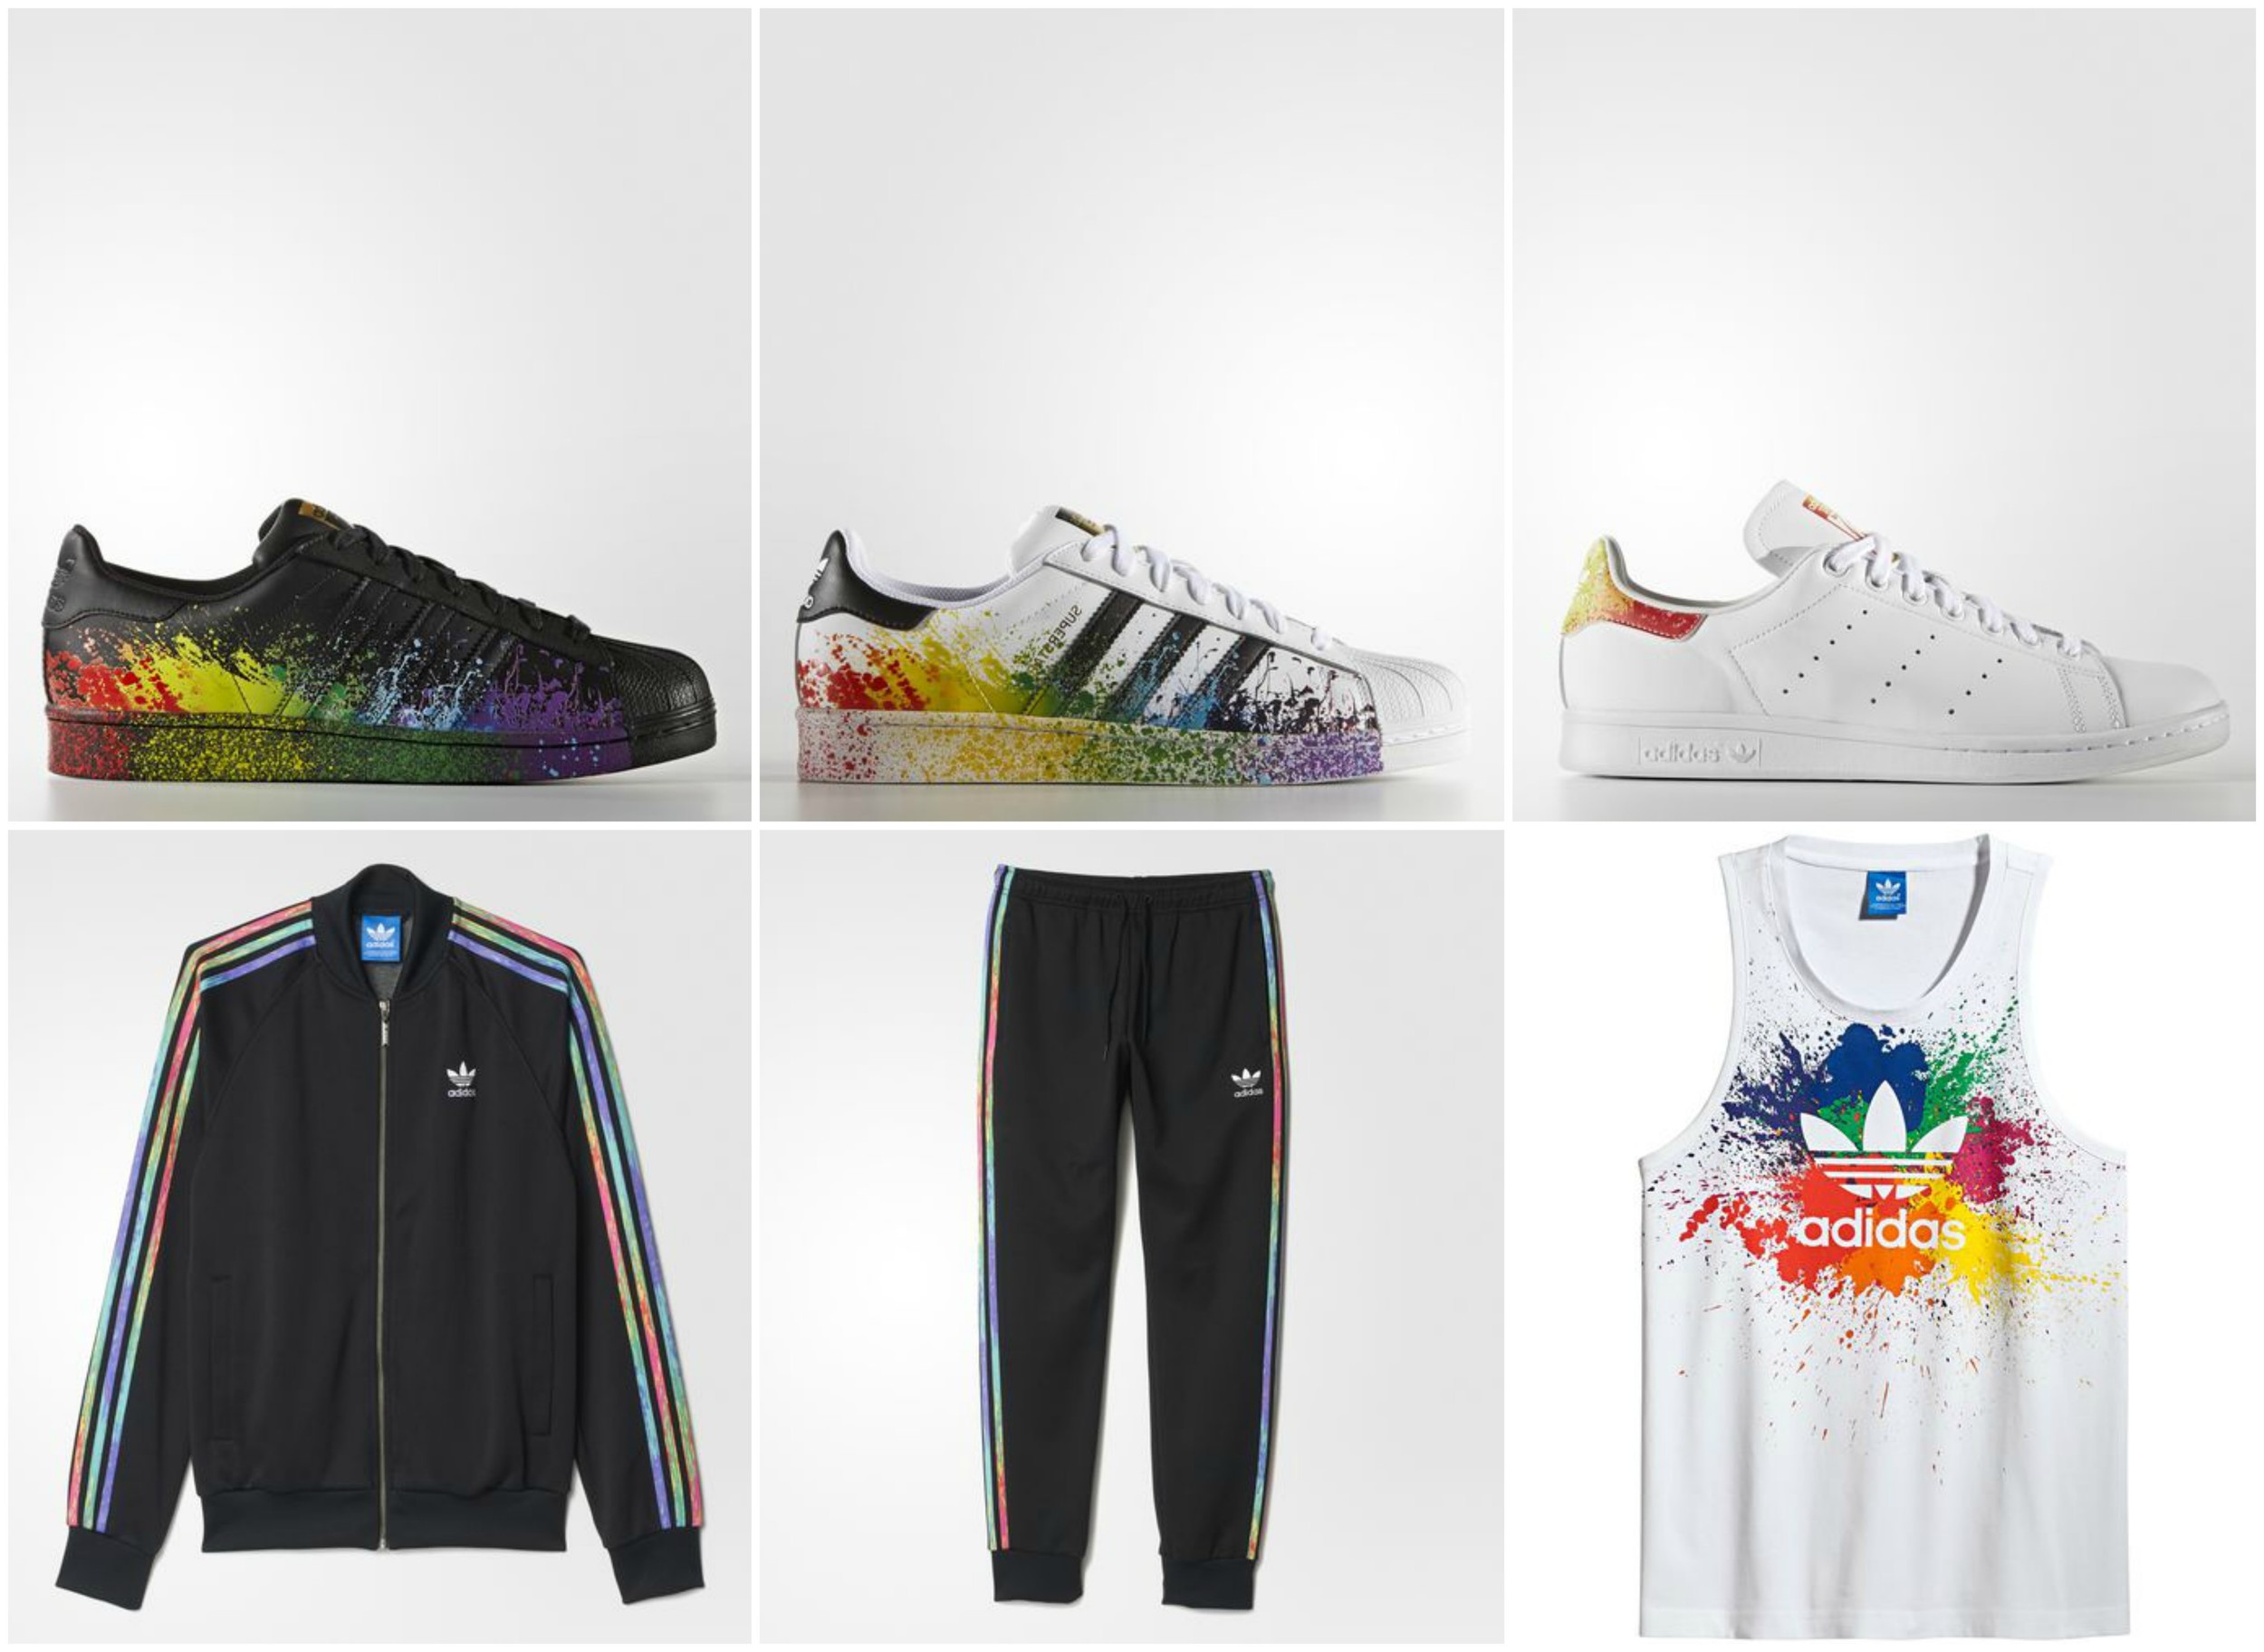 adidas pride collection